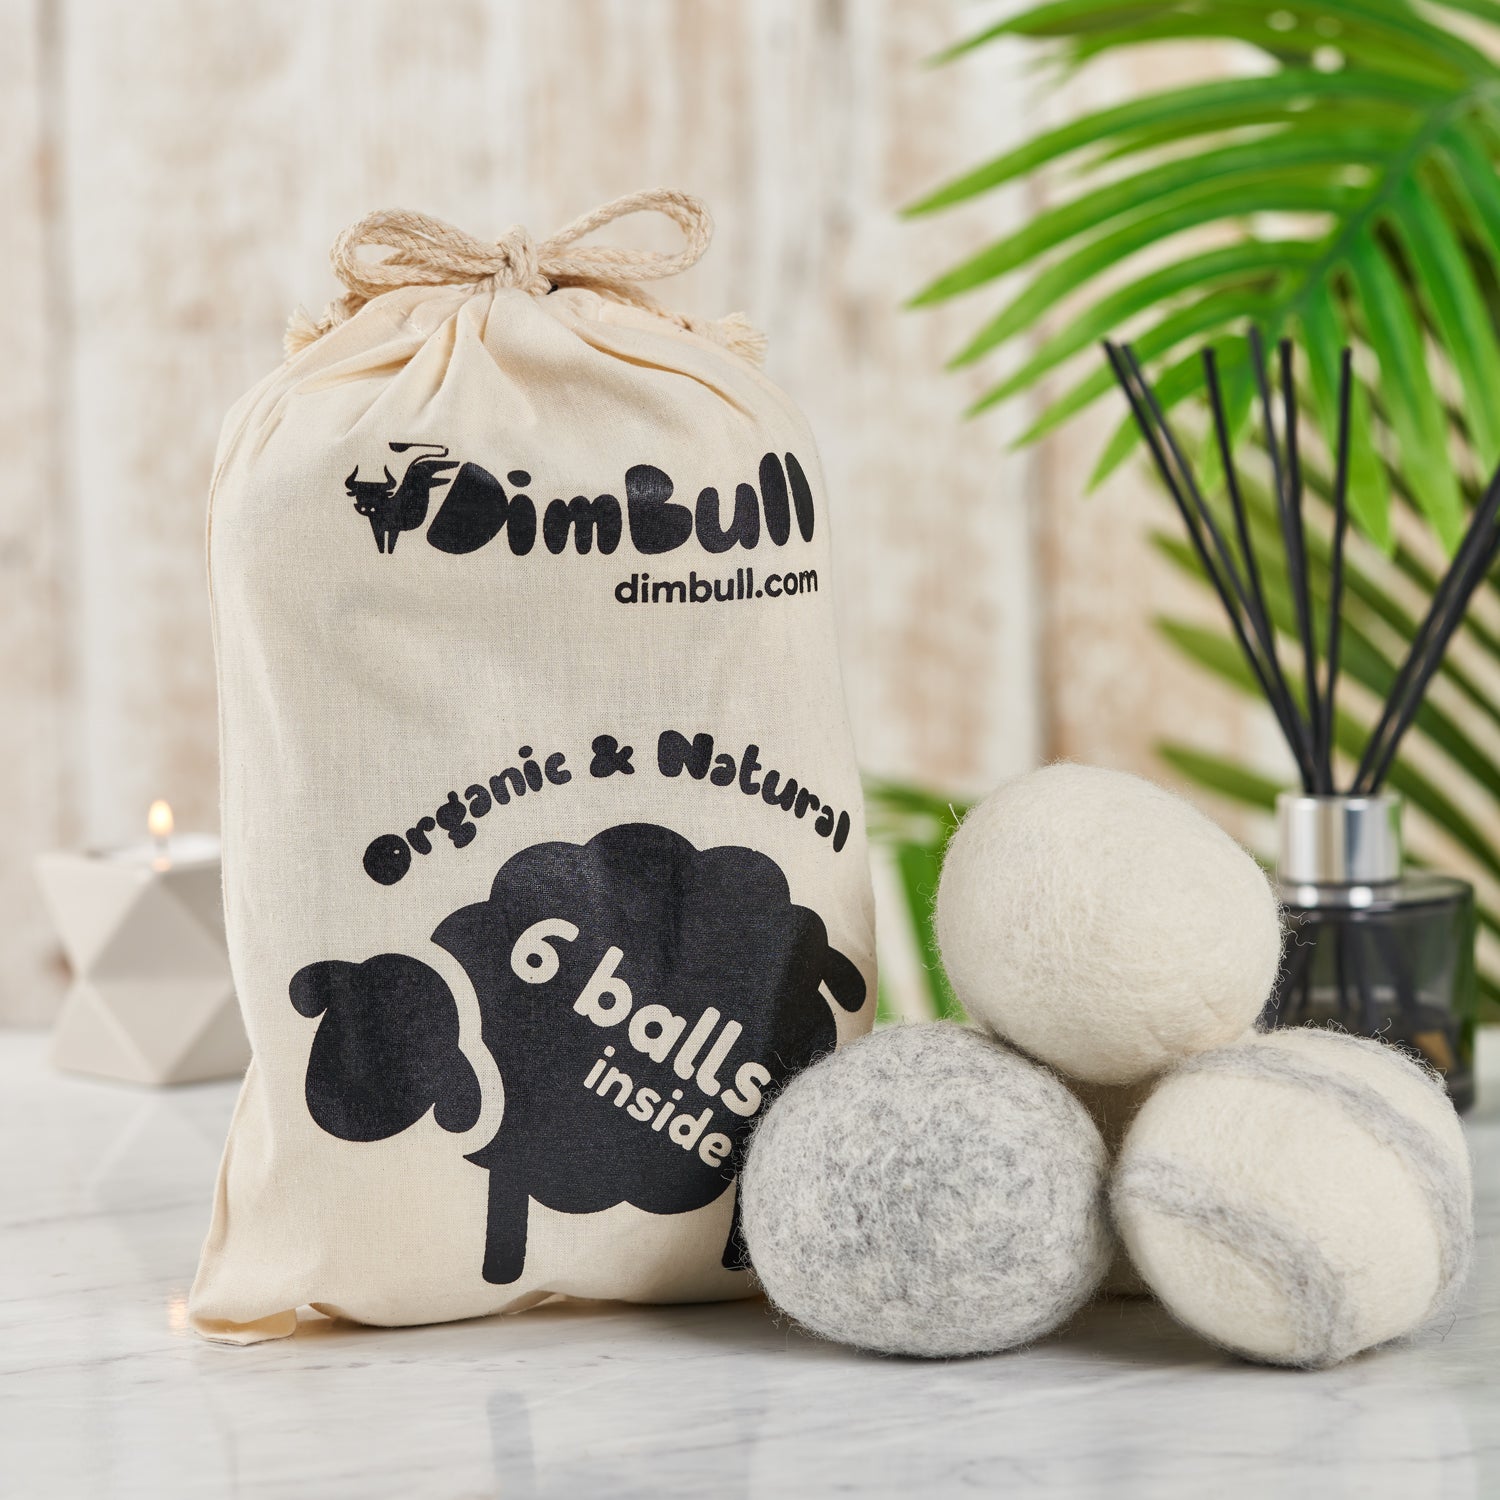 Blended wool dryer balls with bag